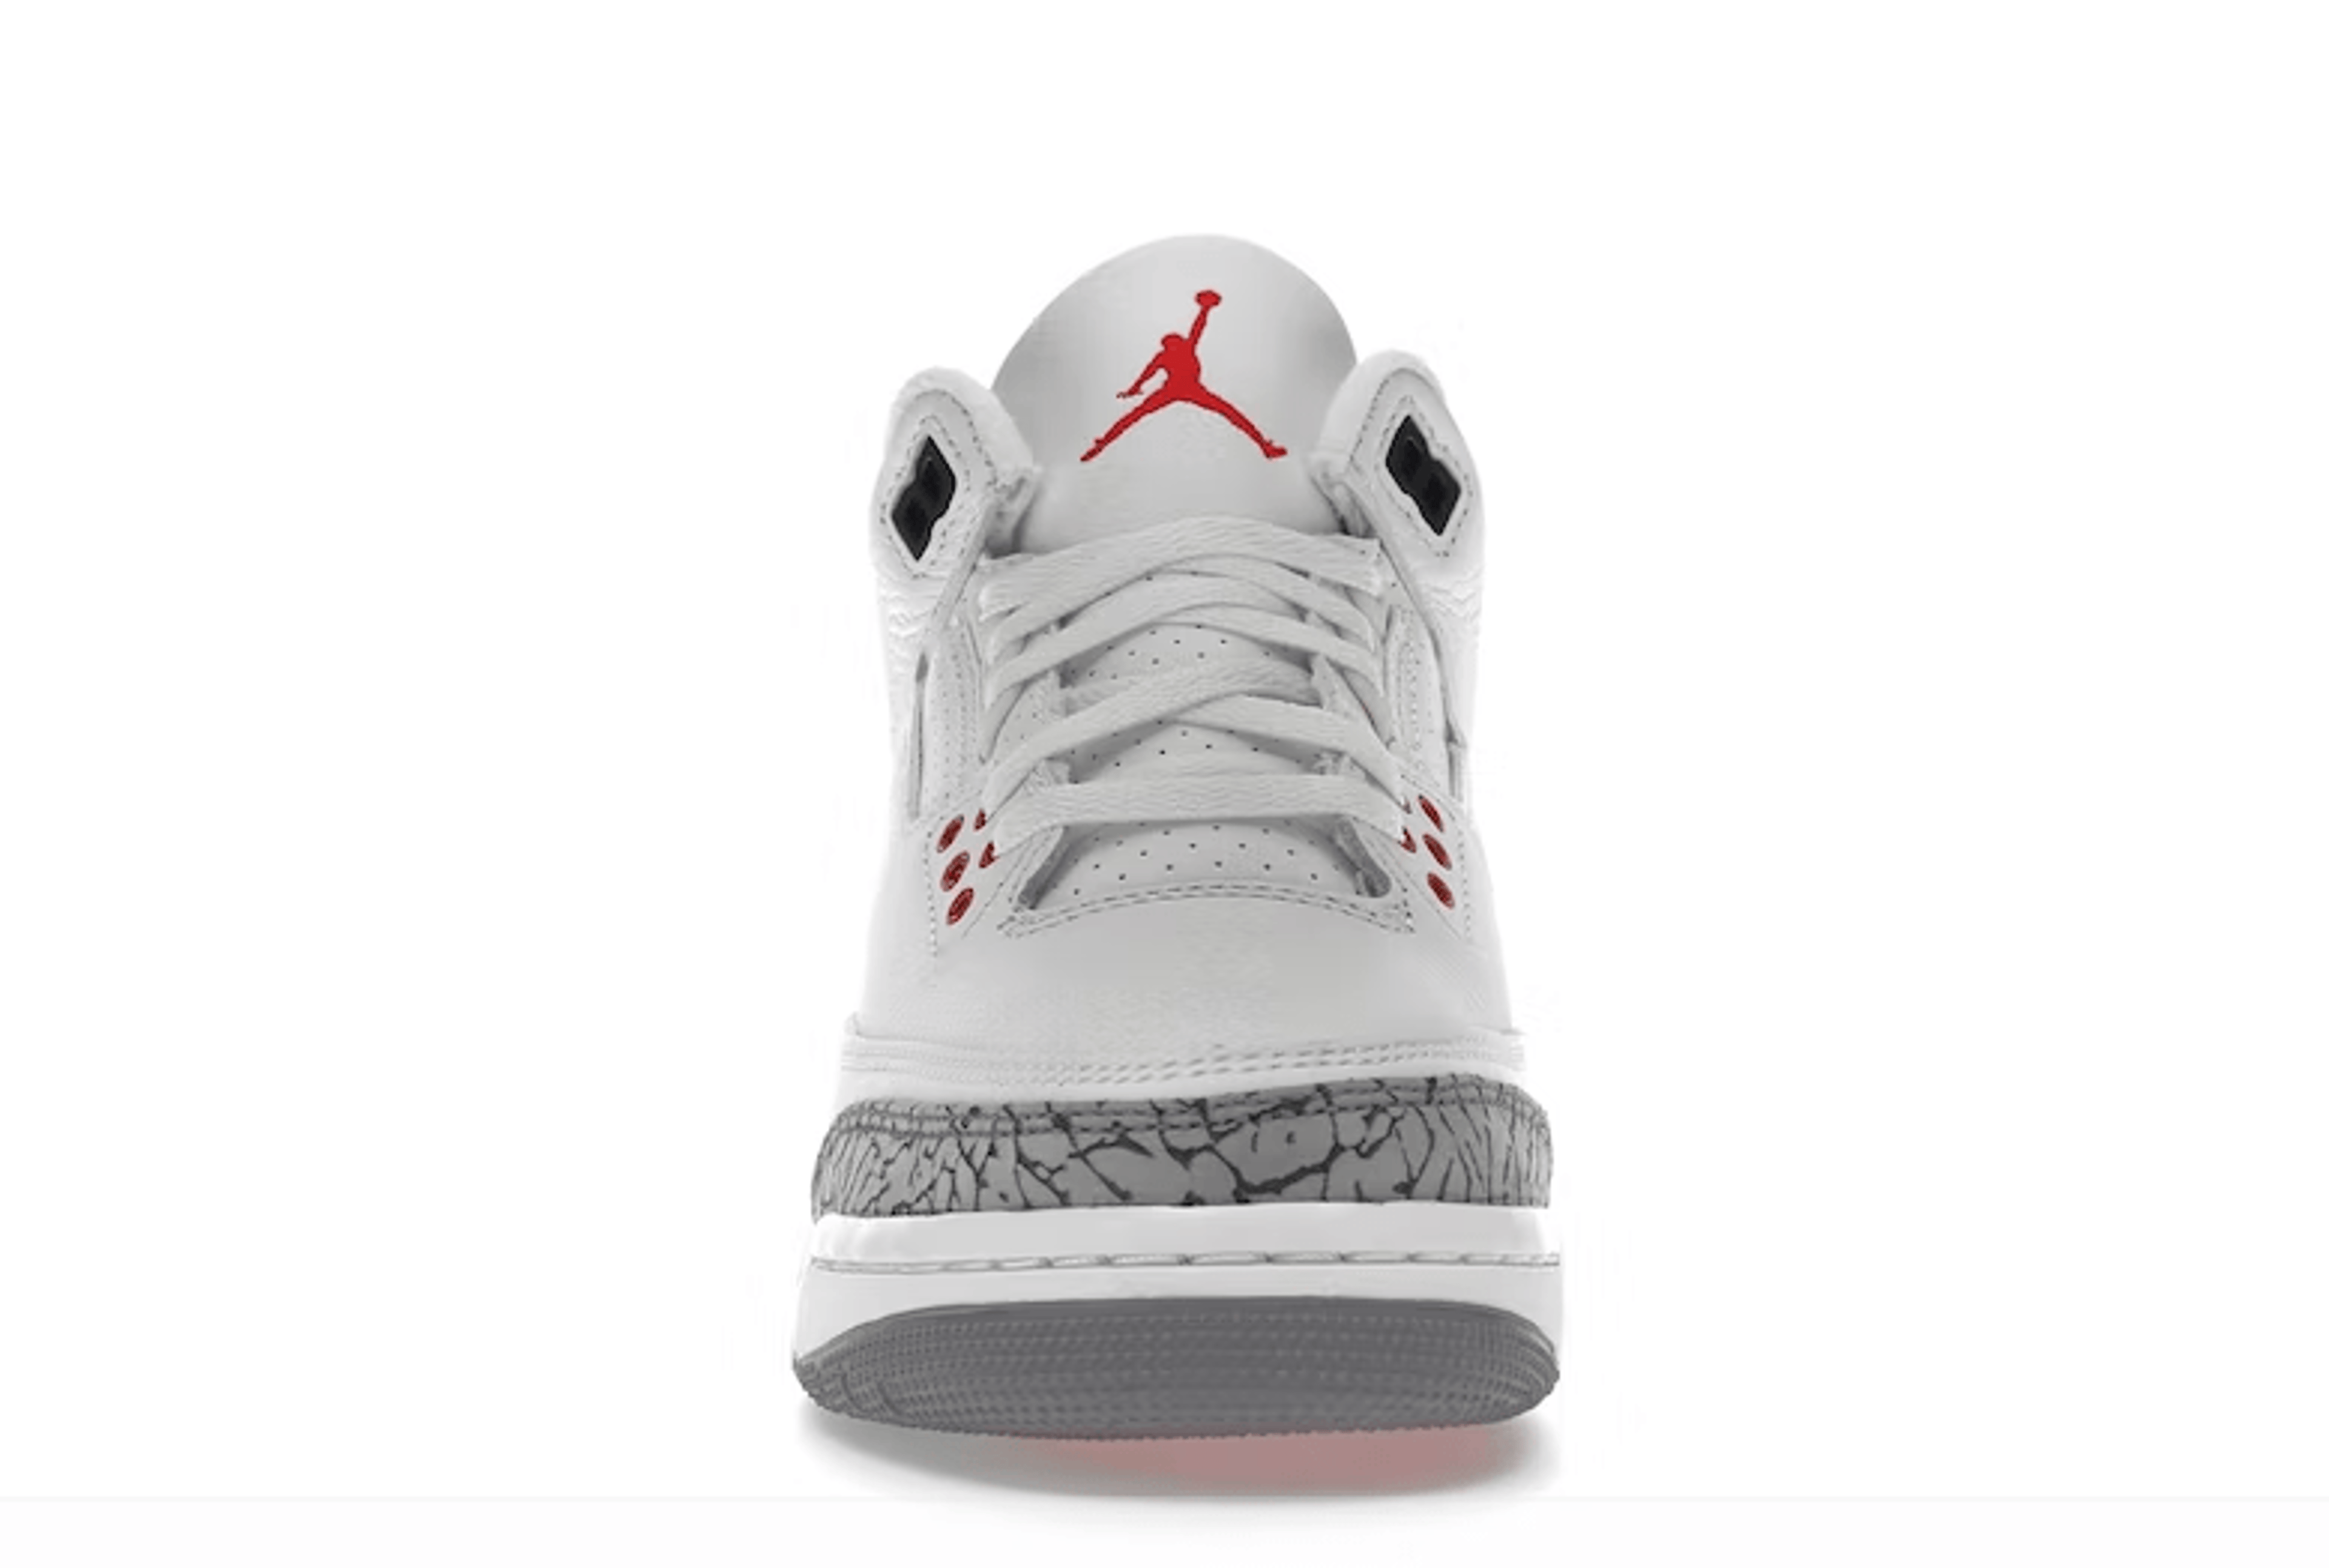 Alternate View 2 of Air Jordan 3 Retro White Cement Reimagined (GS)